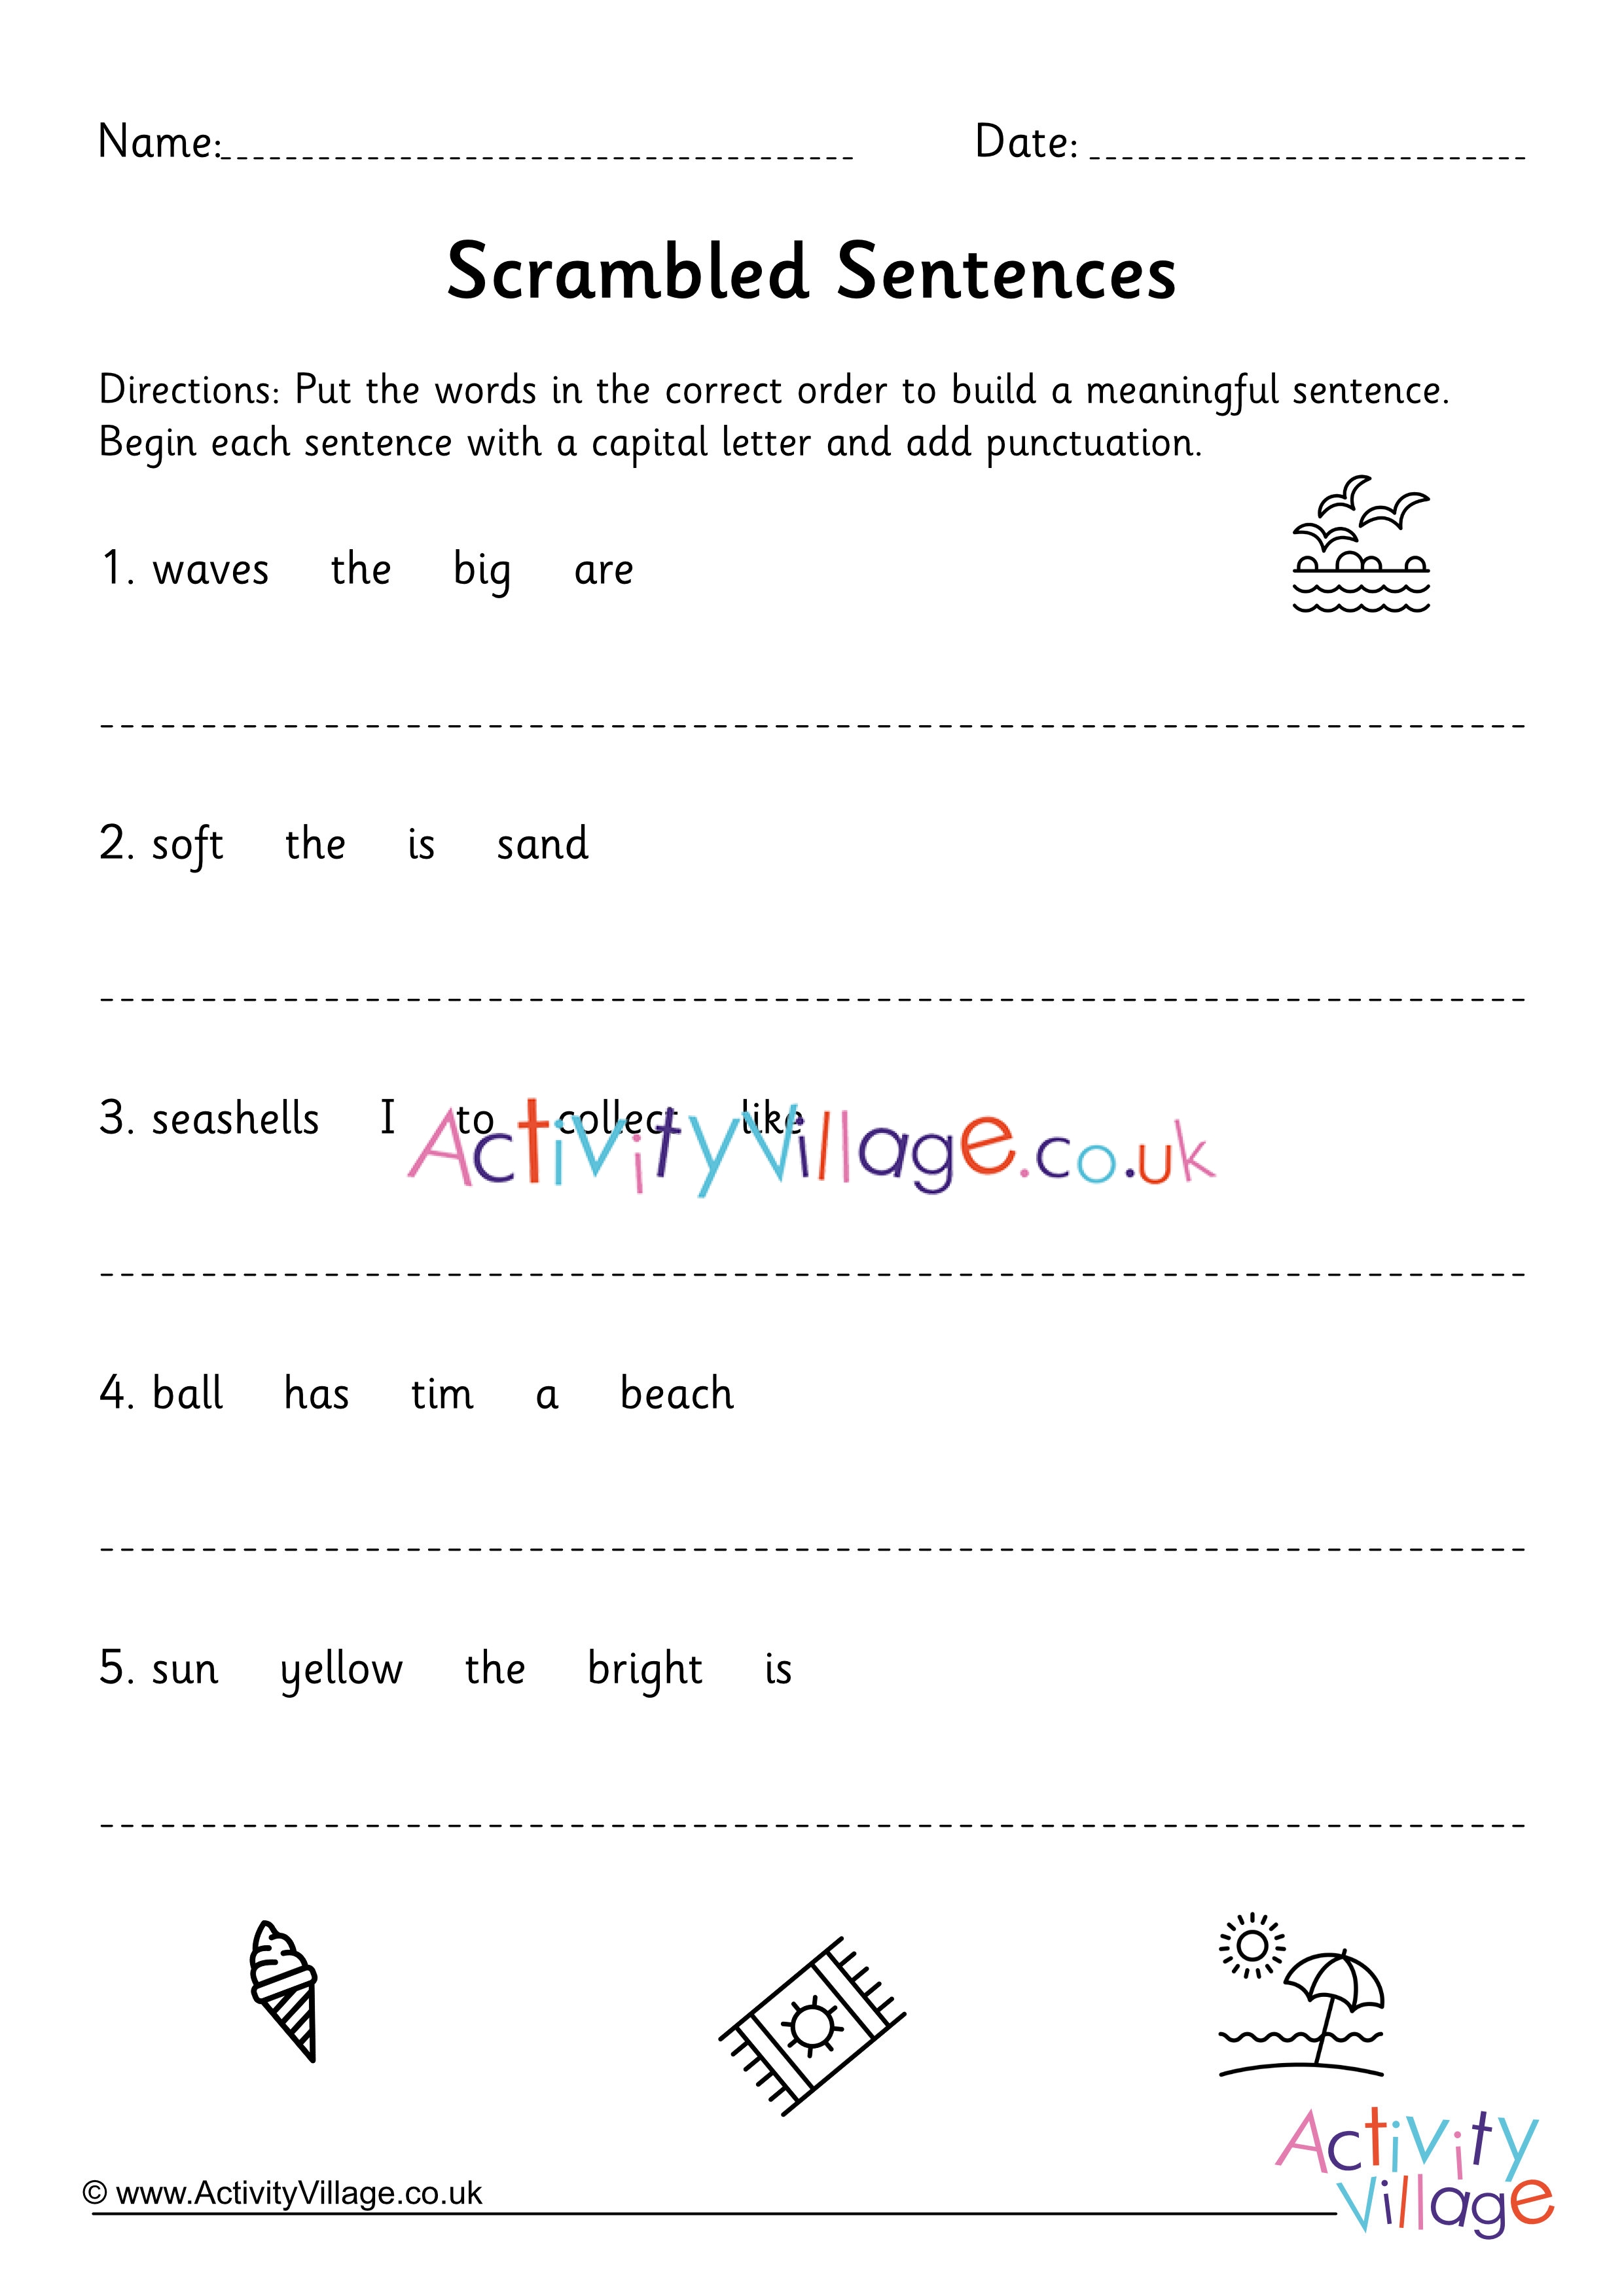 free-printable-scrambled-sentences-worksheets-lexia-s-blog